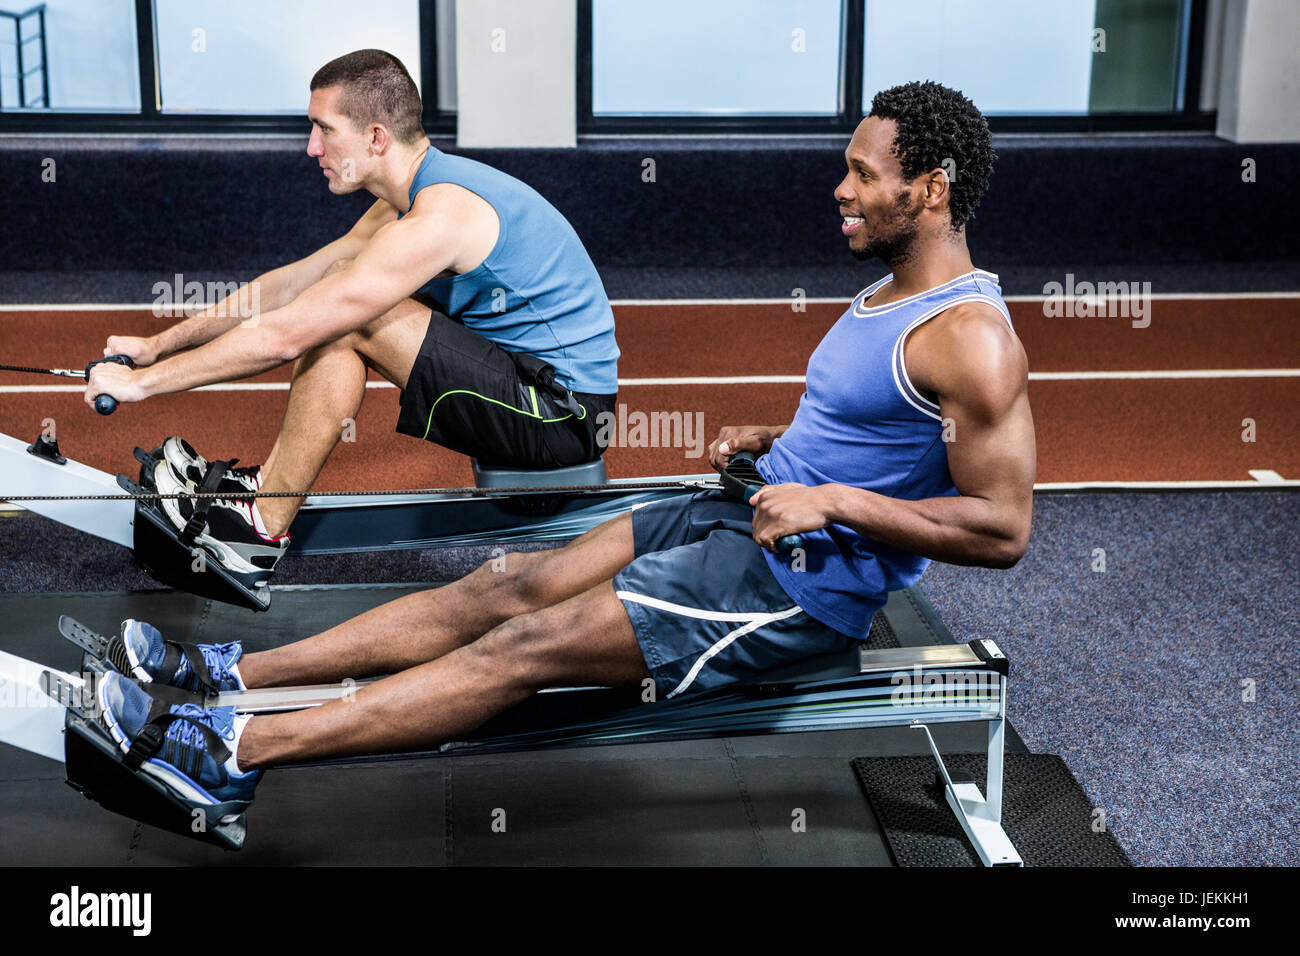 Muscular men using rowing machine Stock Photo